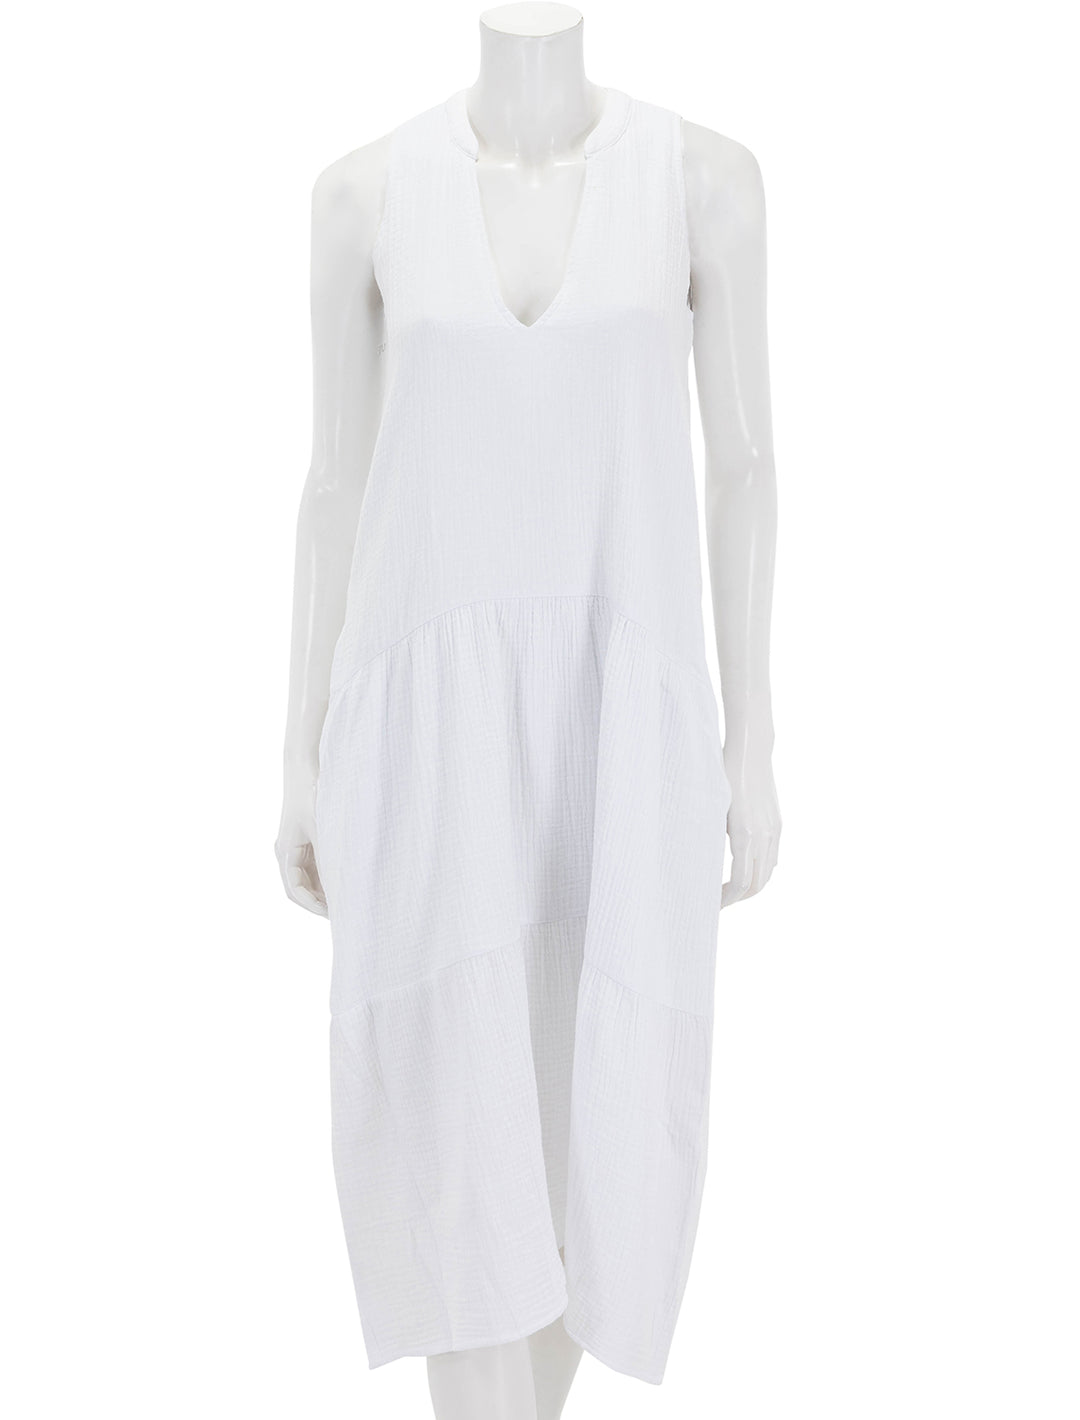 Front view of Splendid's sumner gauze maxi dress in white.